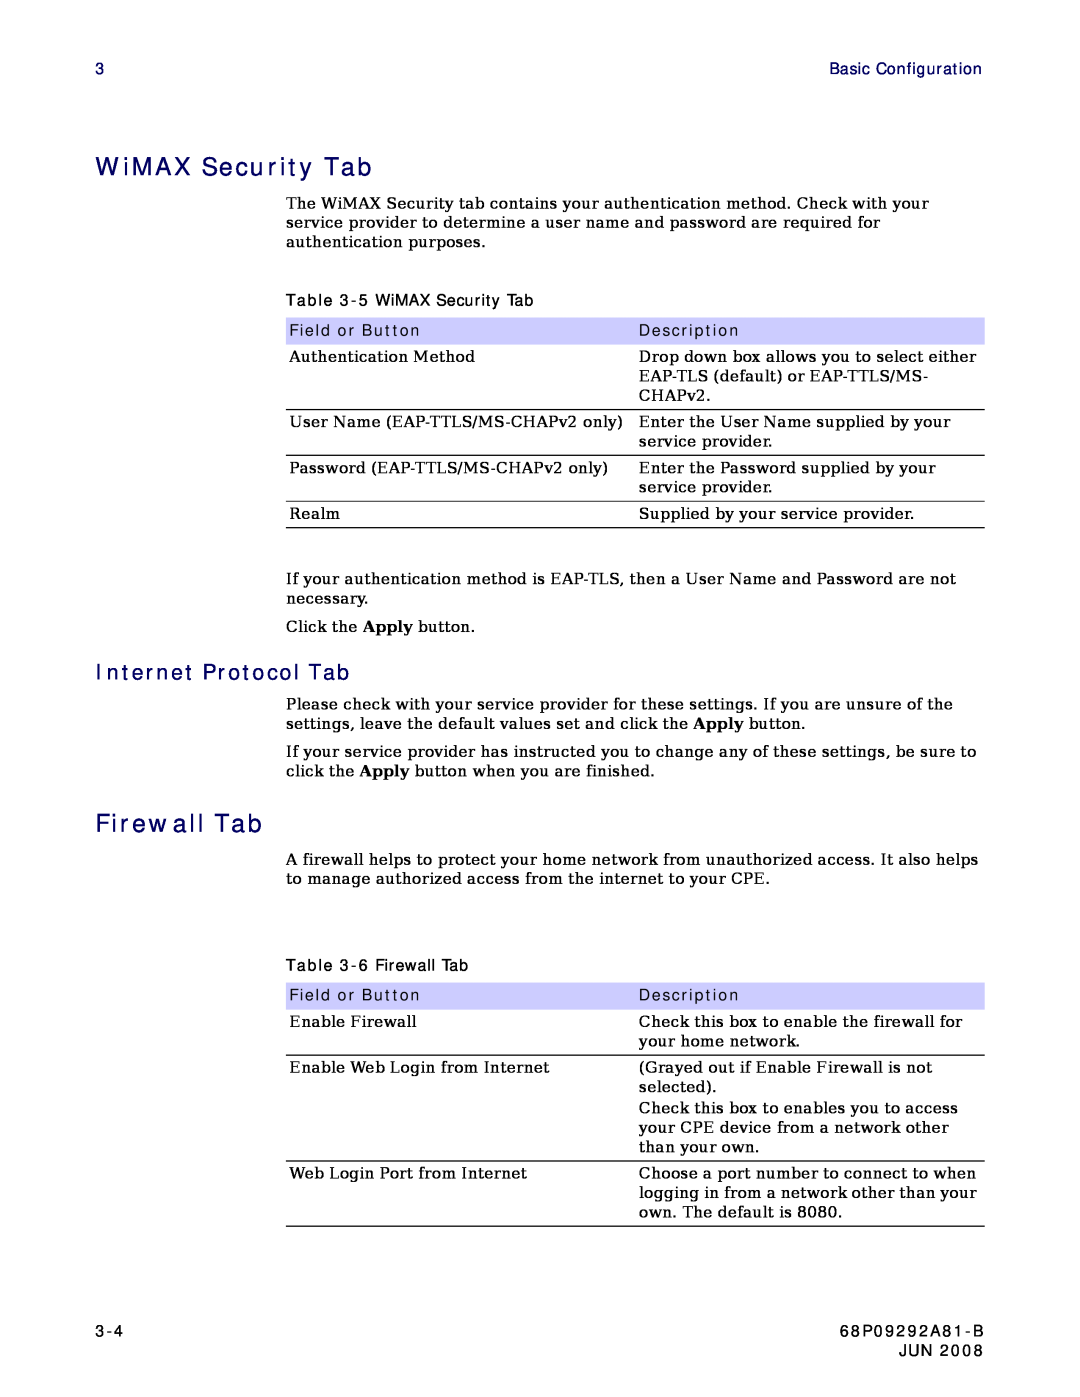 Motorola CPEI 750 WiMAX Security Tab, Firewall Tab, Internet Protocol Tab, Field or Button, Description, 68P09292A81-B 